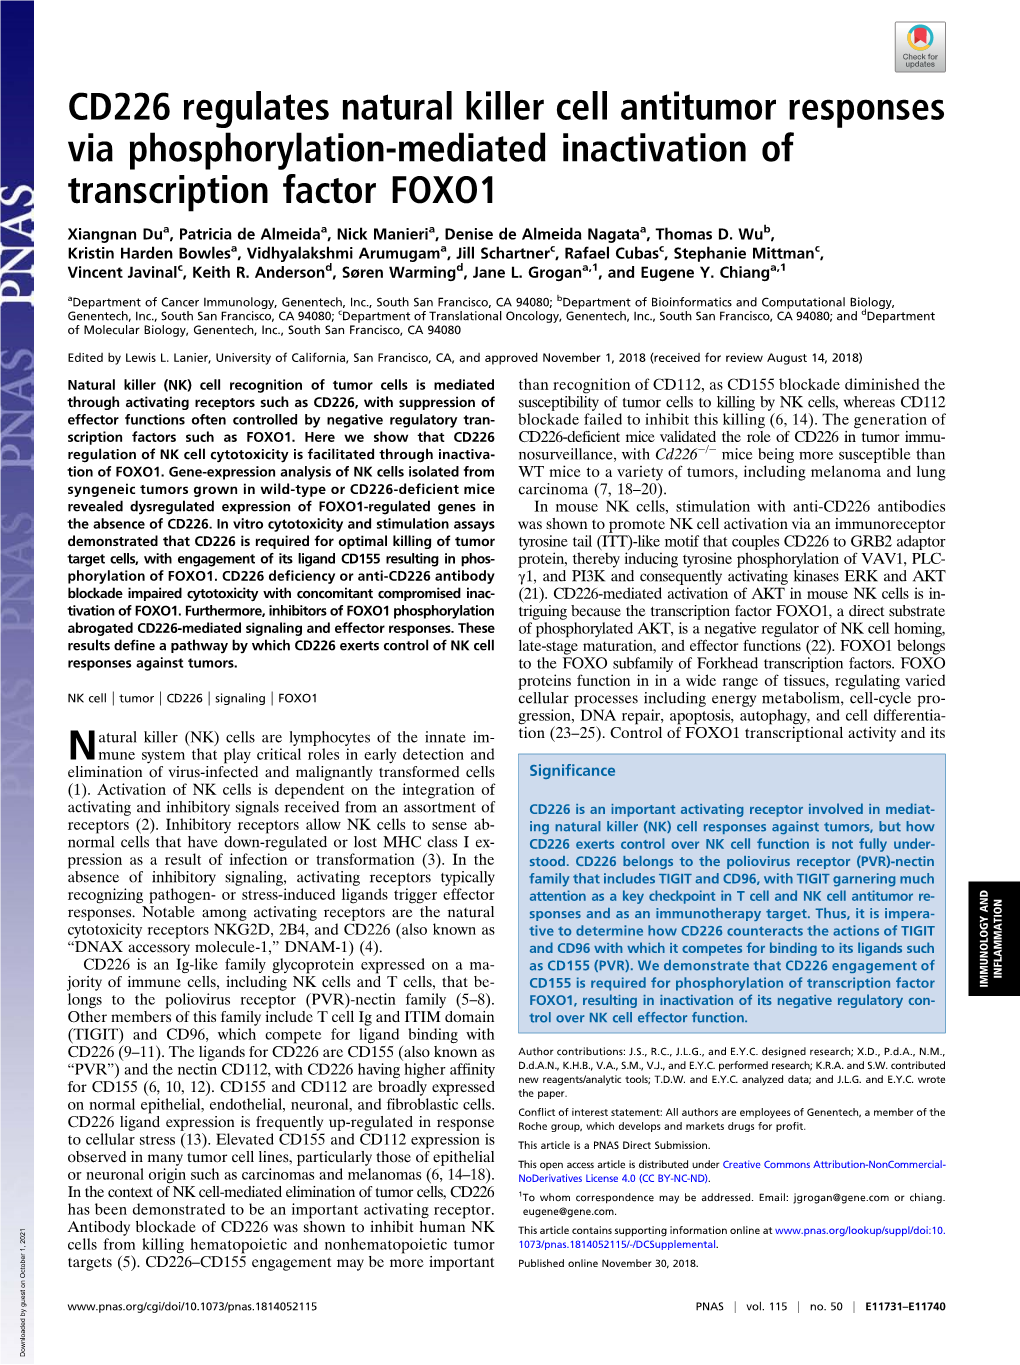 CD226 Regulates Natural Killer Cell Antitumor Responses Via Phosphorylation-Mediated Inactivation of Transcription Factor FOXO1